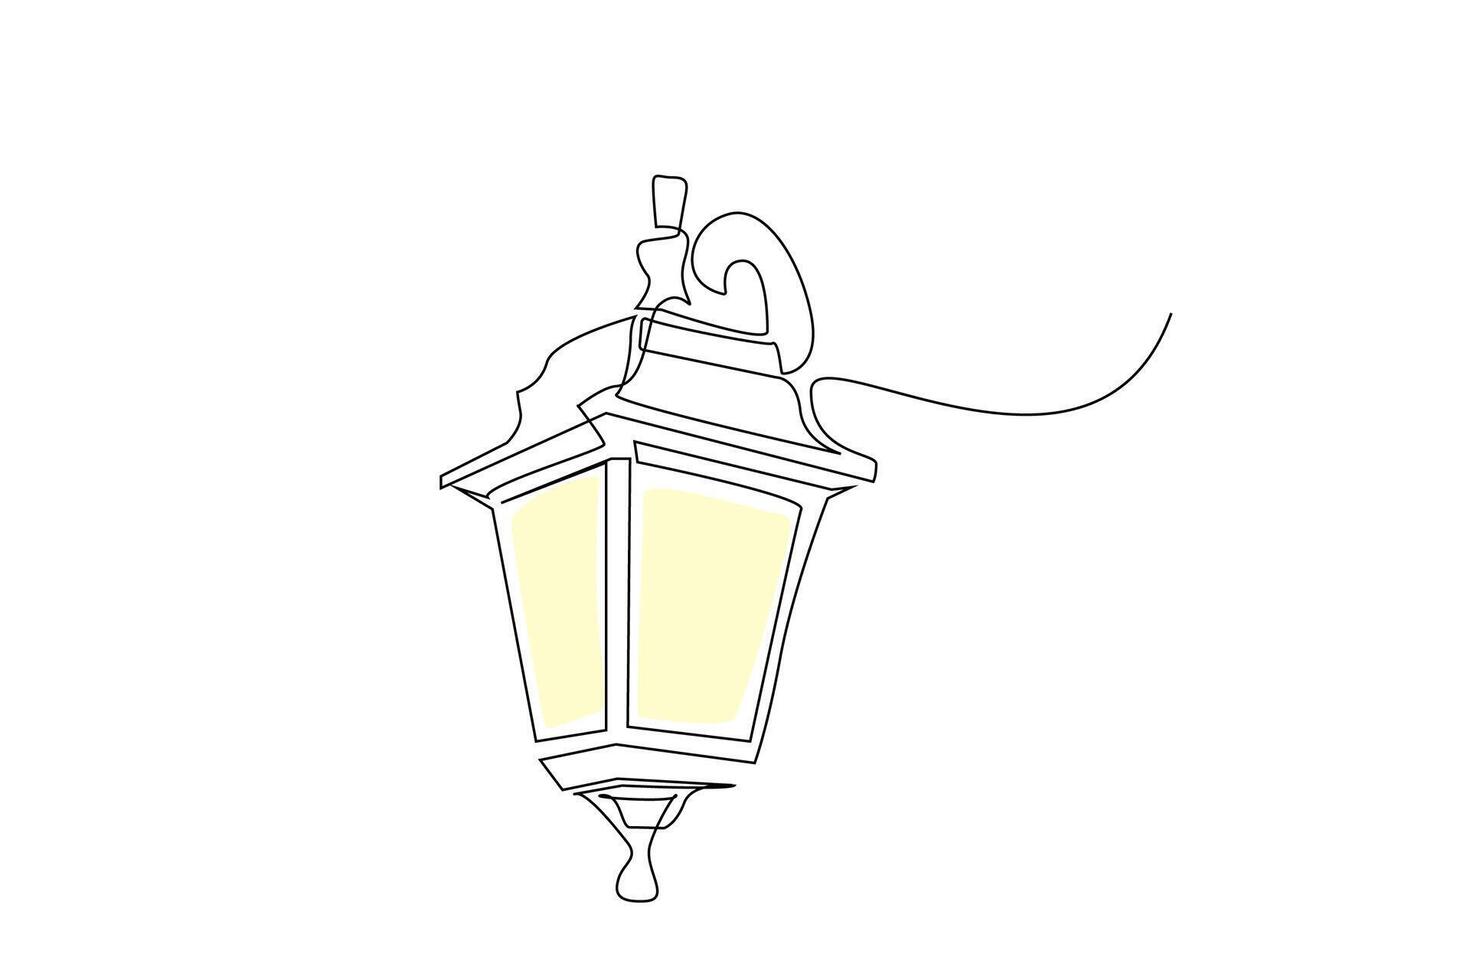 Lampe Laterne Jahrgang alt Objekt einer Linie Kunst Design vektor